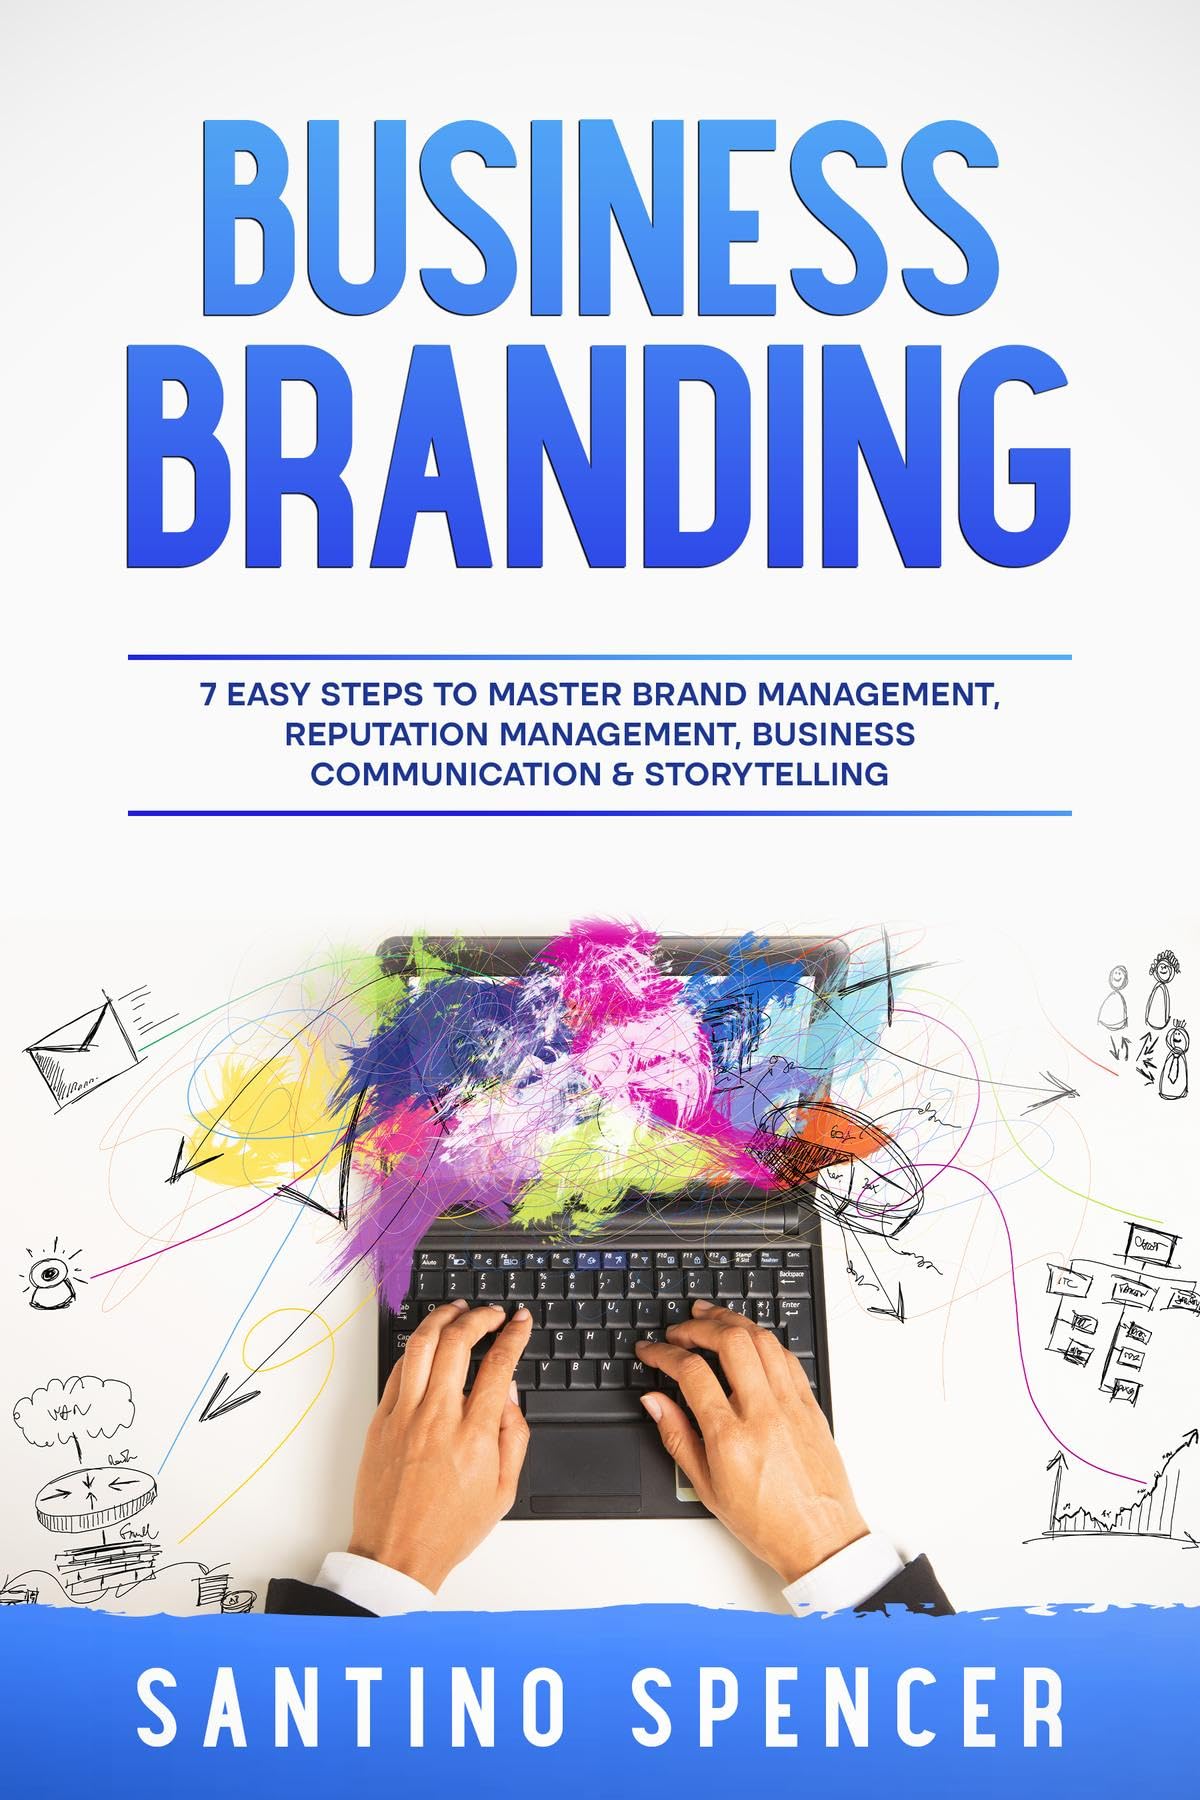 Business Branding: 7 Easy Steps to Master Brand Management, Reputation Management, Business Communication & Storytelling (Marketing Management Book 2)